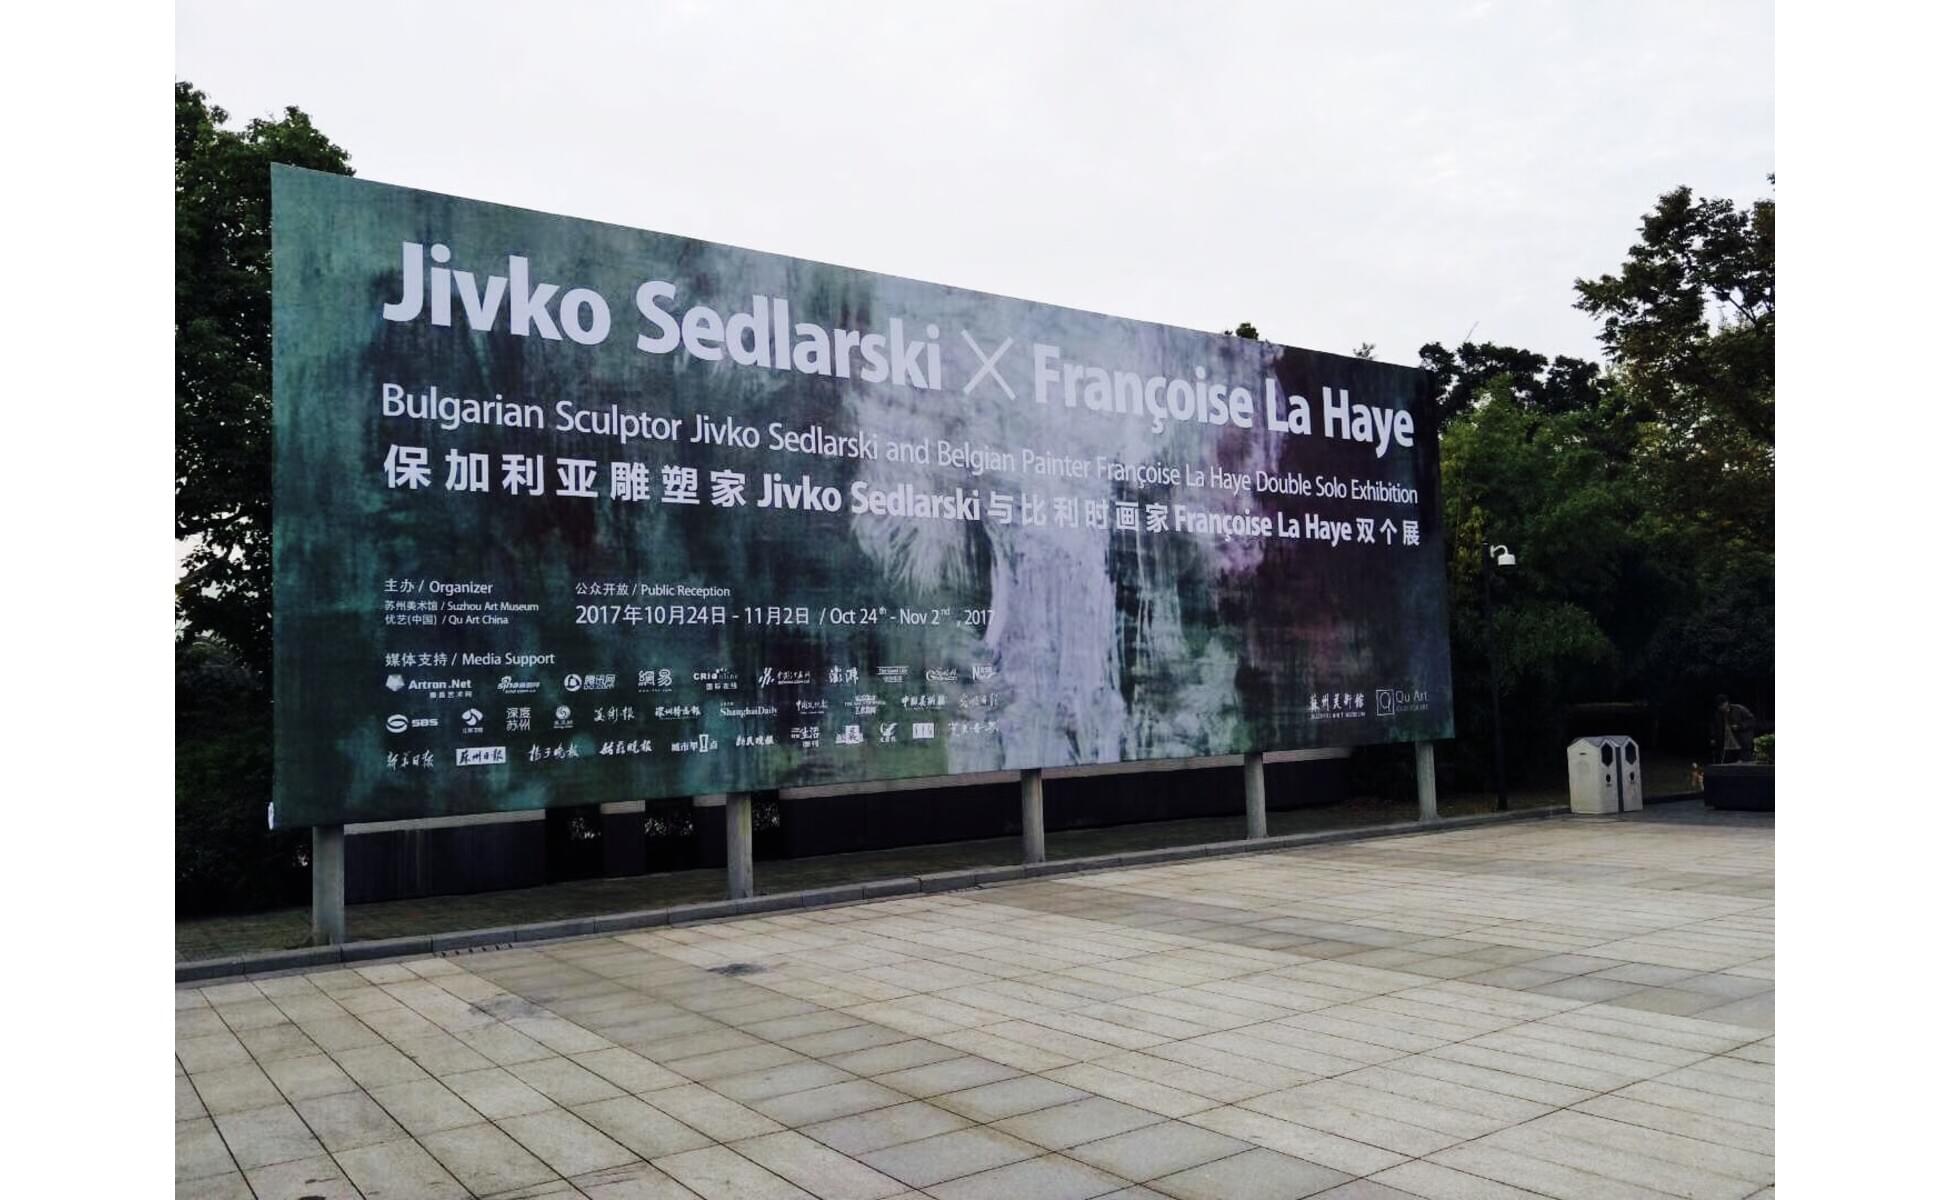 Exhibition Suzhou, China